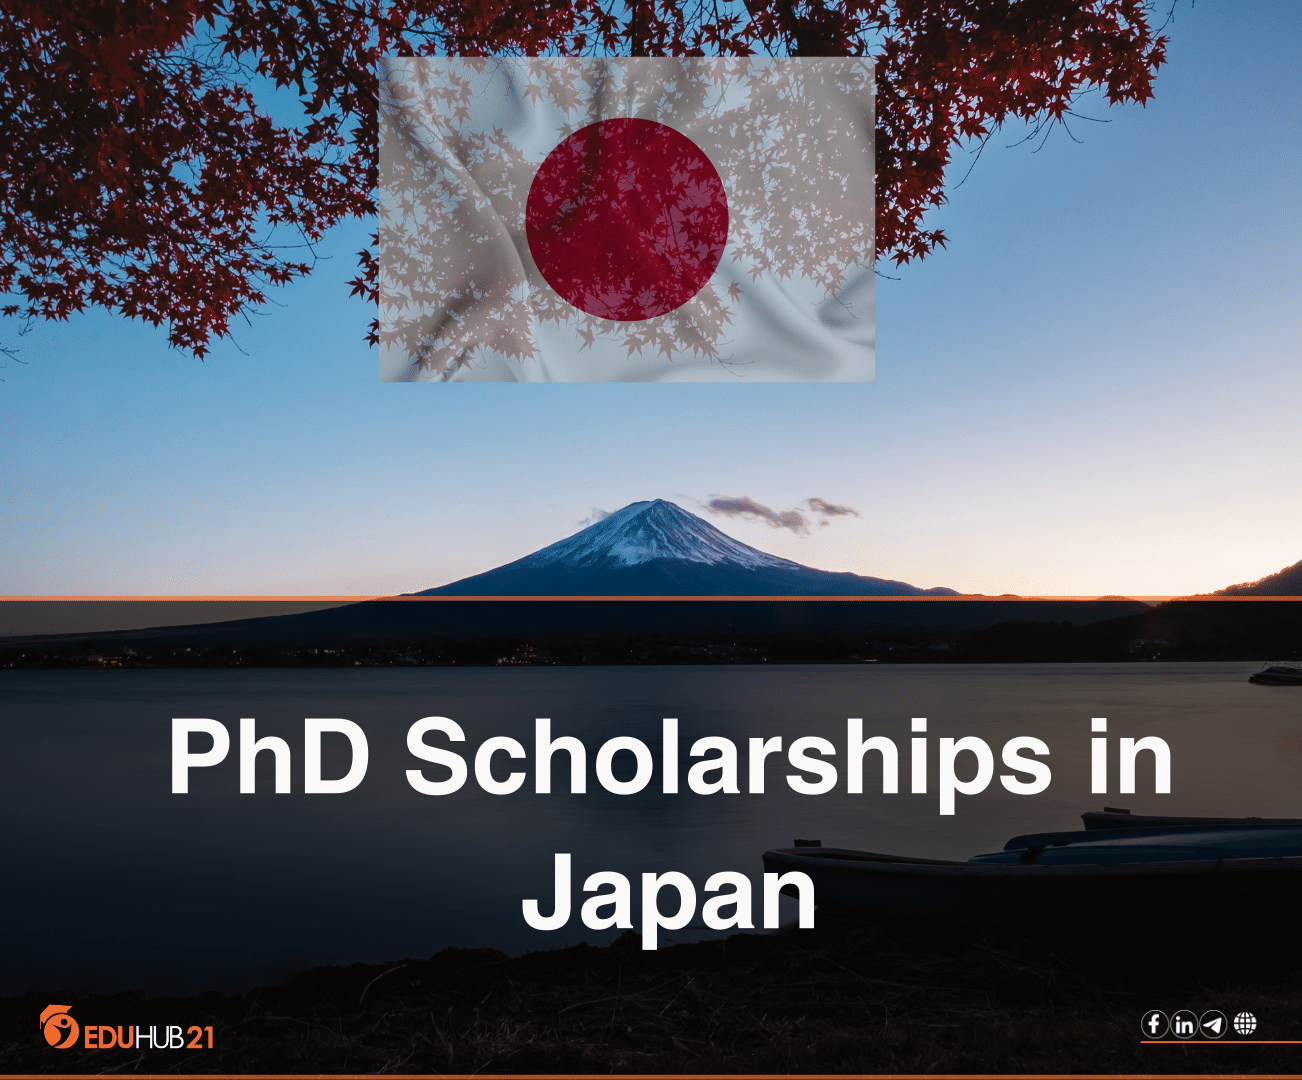 phd scholarship in japan 2023